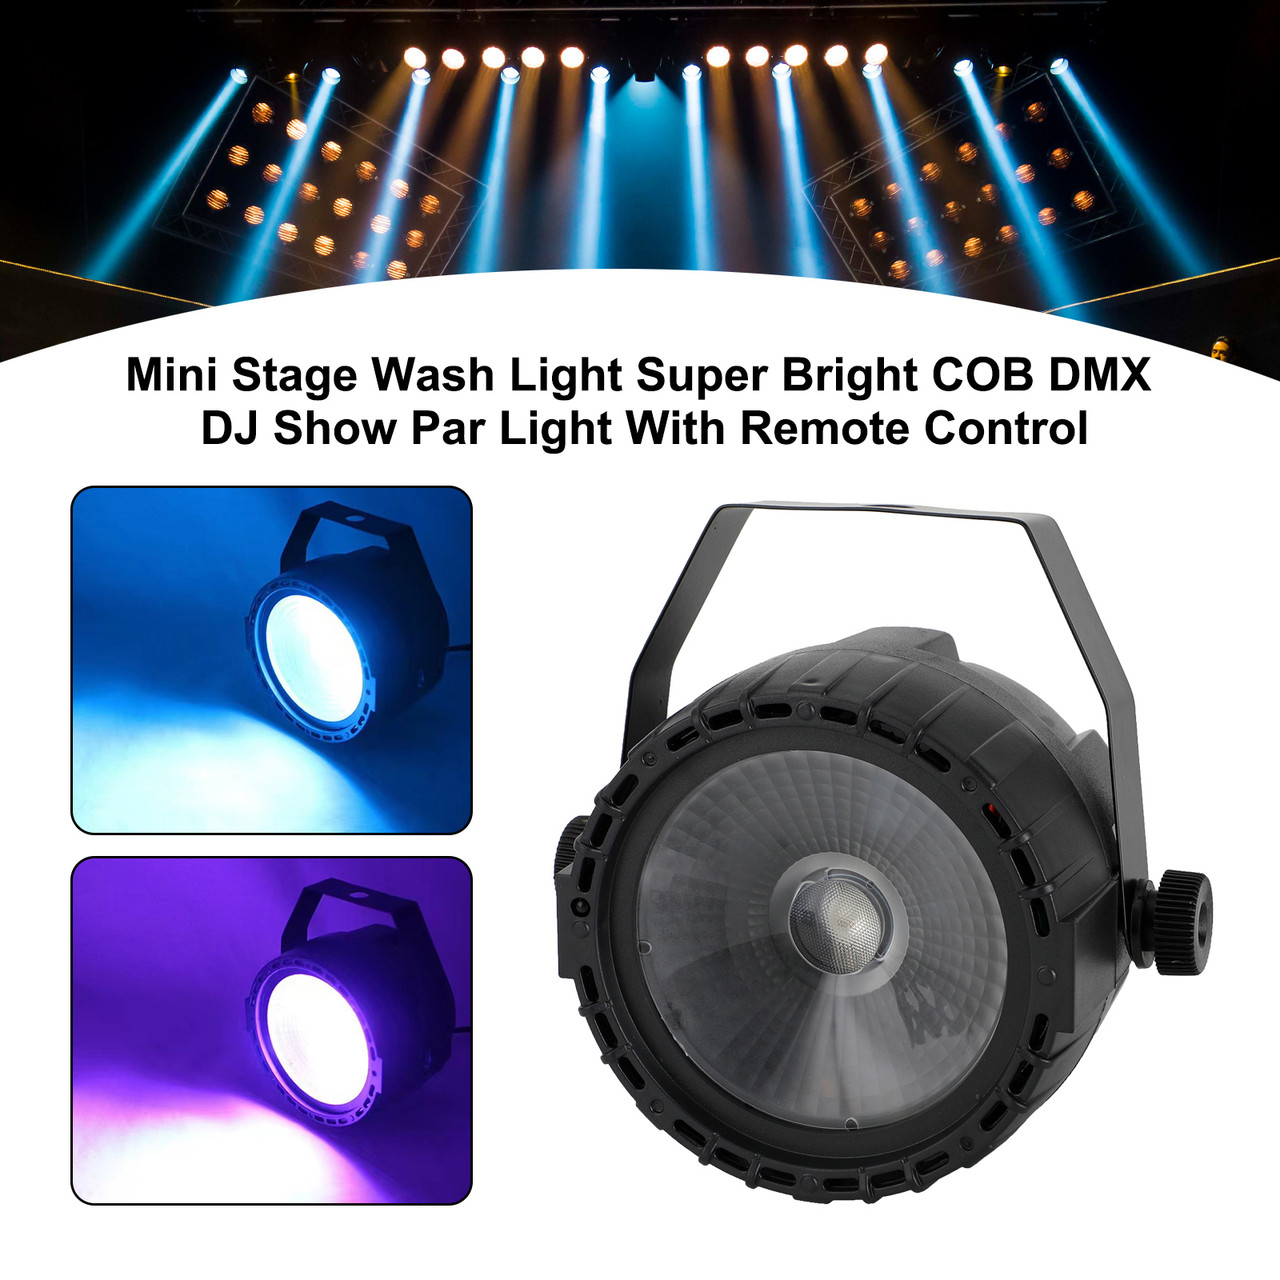 Mini Stage Wash Light Super Bright COB DMX DJ Show Par Light With Remote Control